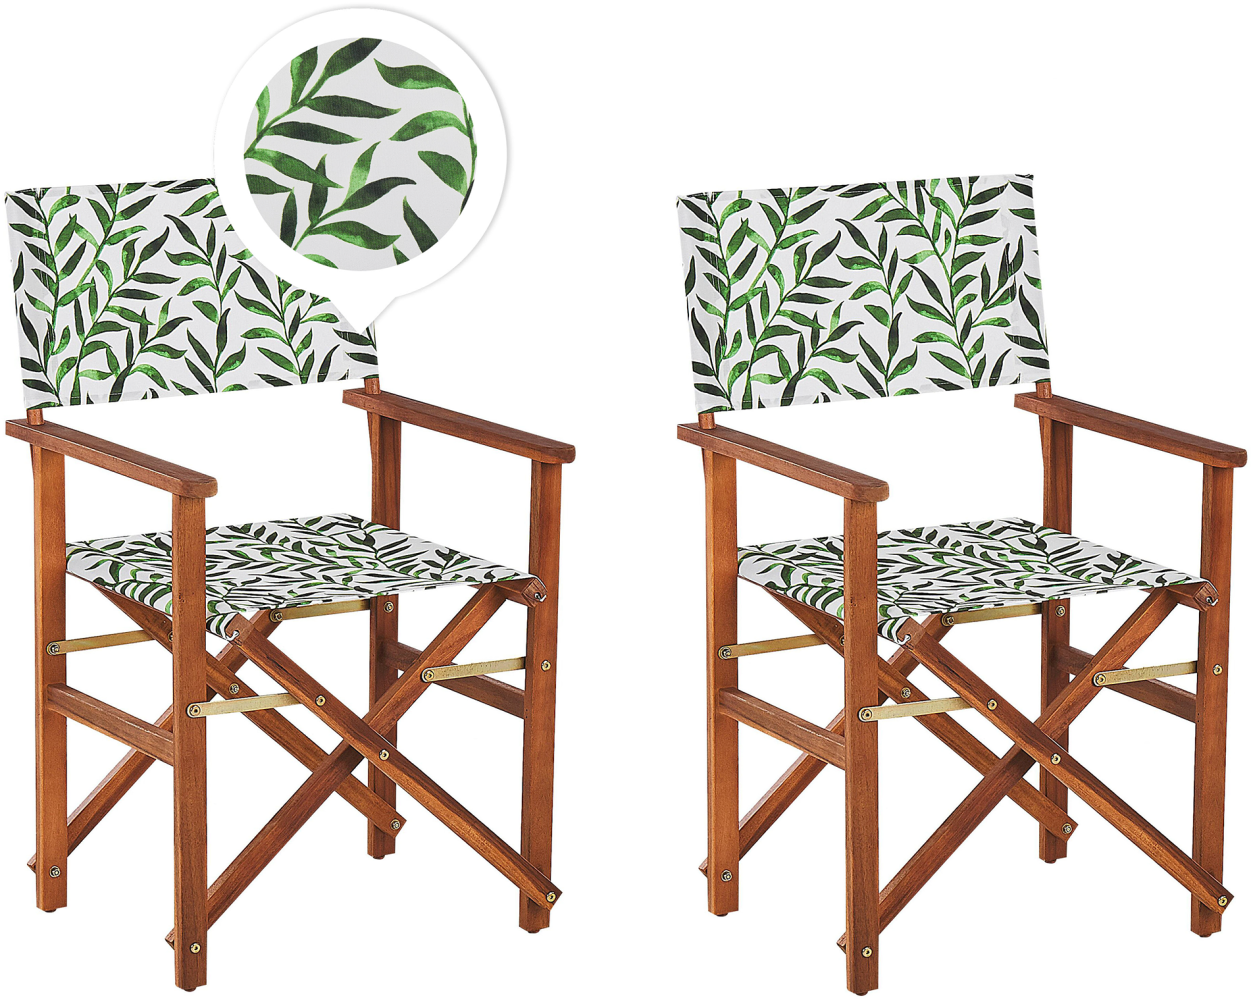 Gartenstuhl Akazienholz dunkelbraun Textil cremeweiß grün Blattmuster 2er Set CINE Bild 1